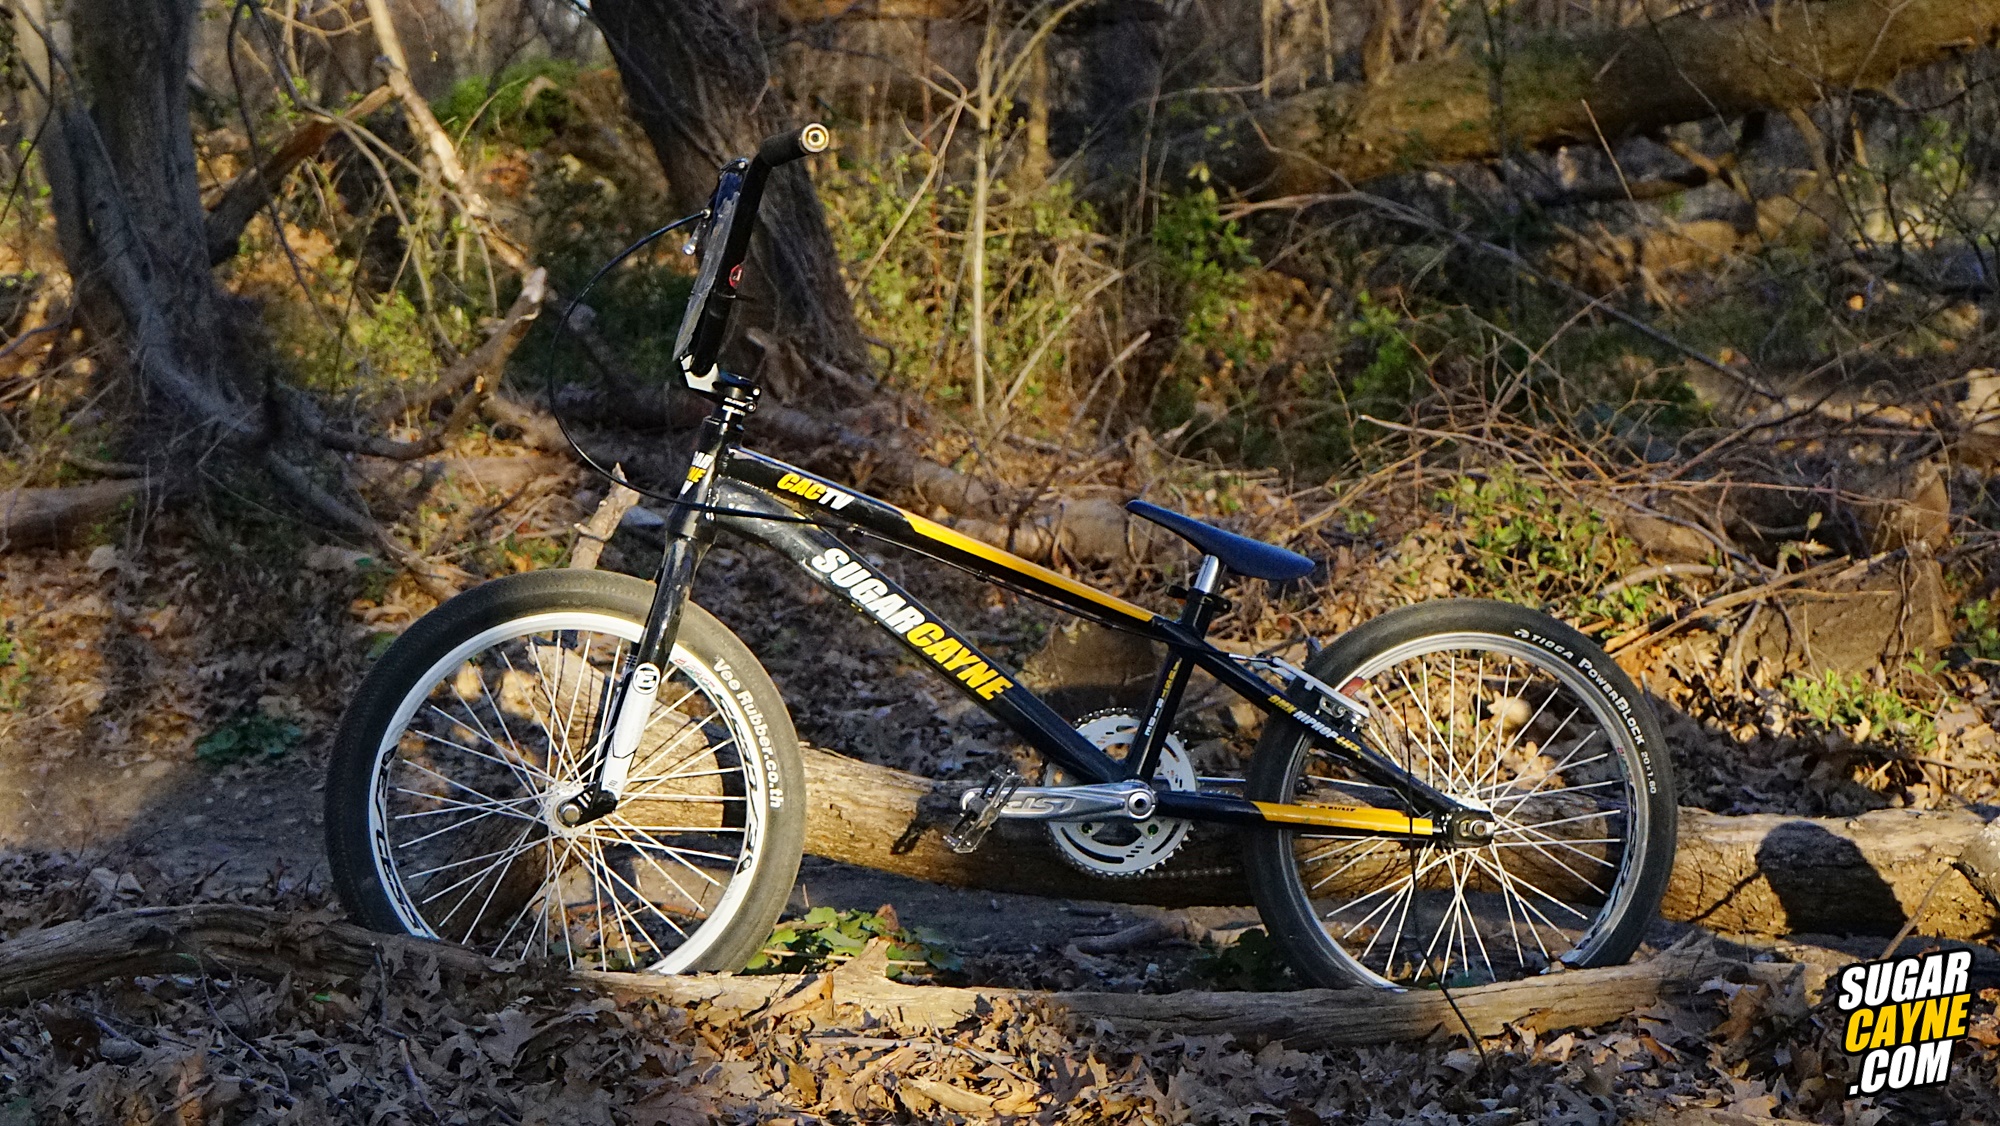 sugar cayne bmx bike 20 inch